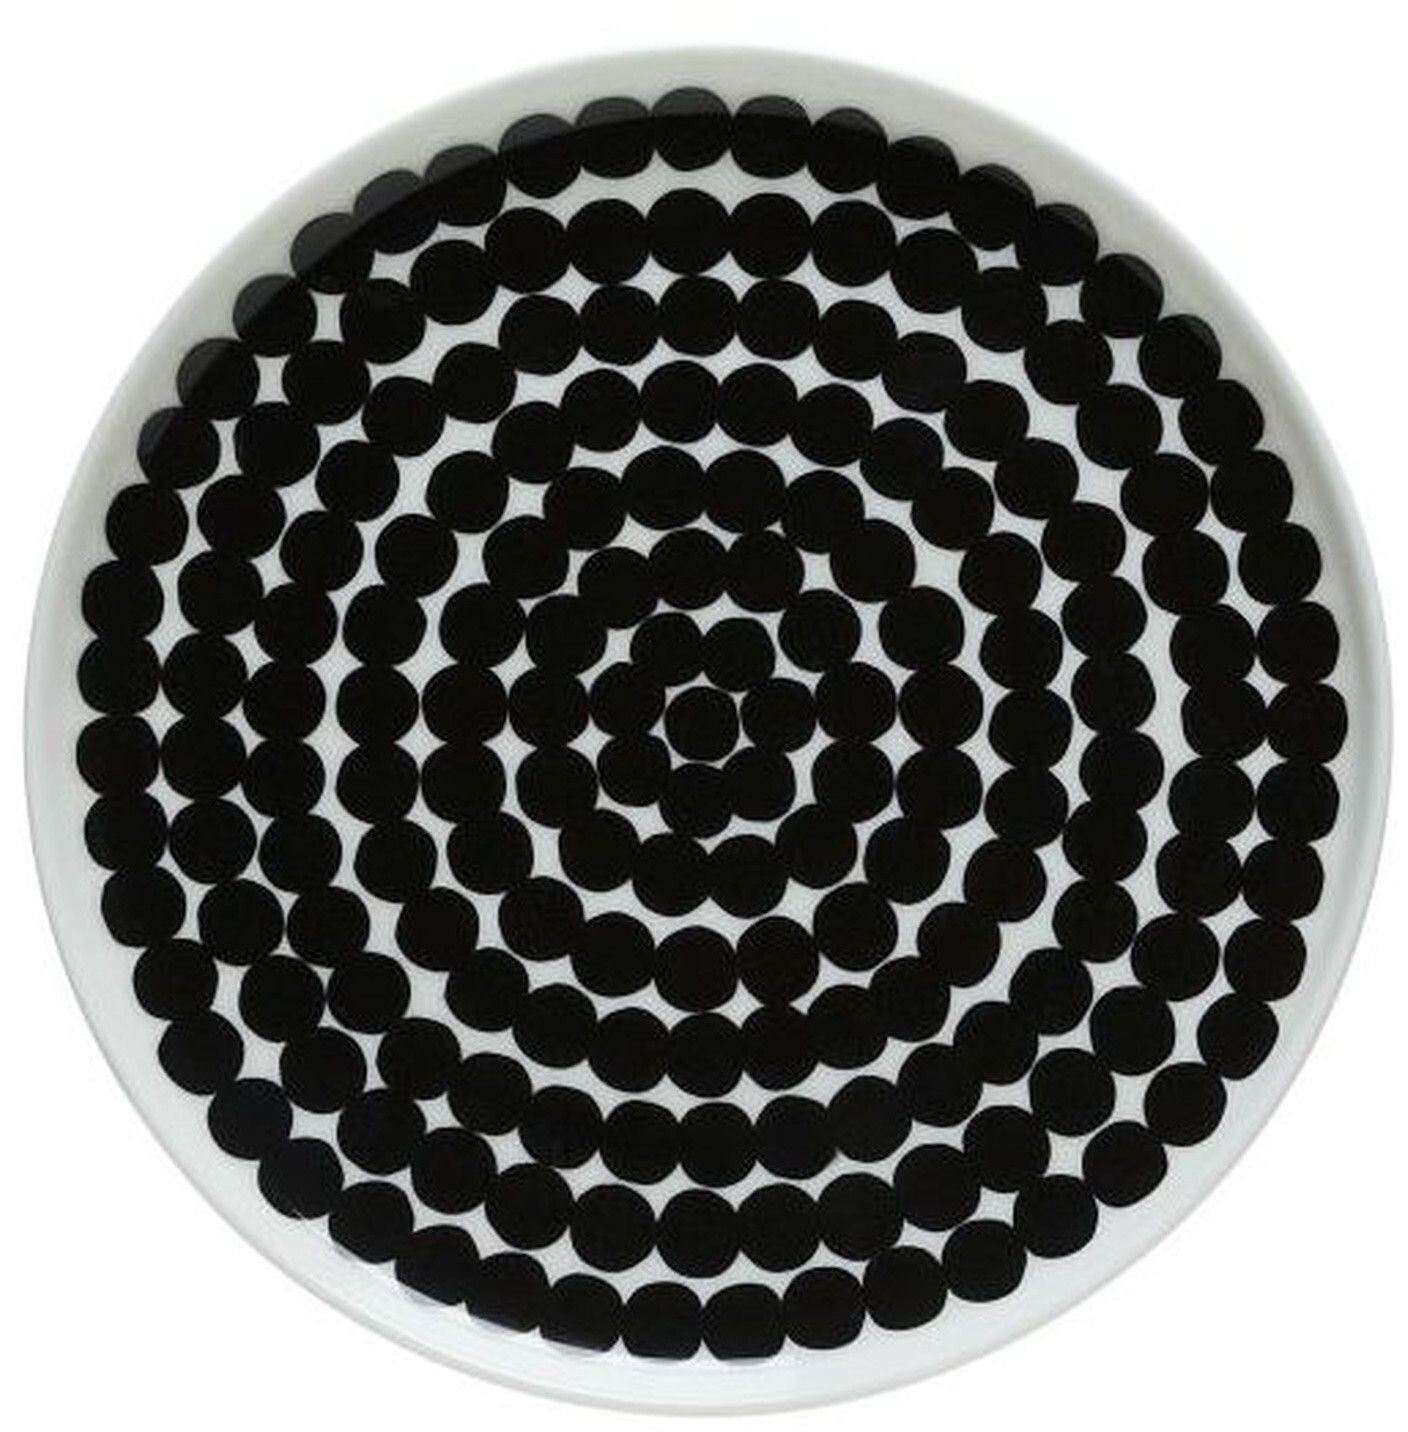 Marimekko Räsymatto plate (20 cm) black-white big dots